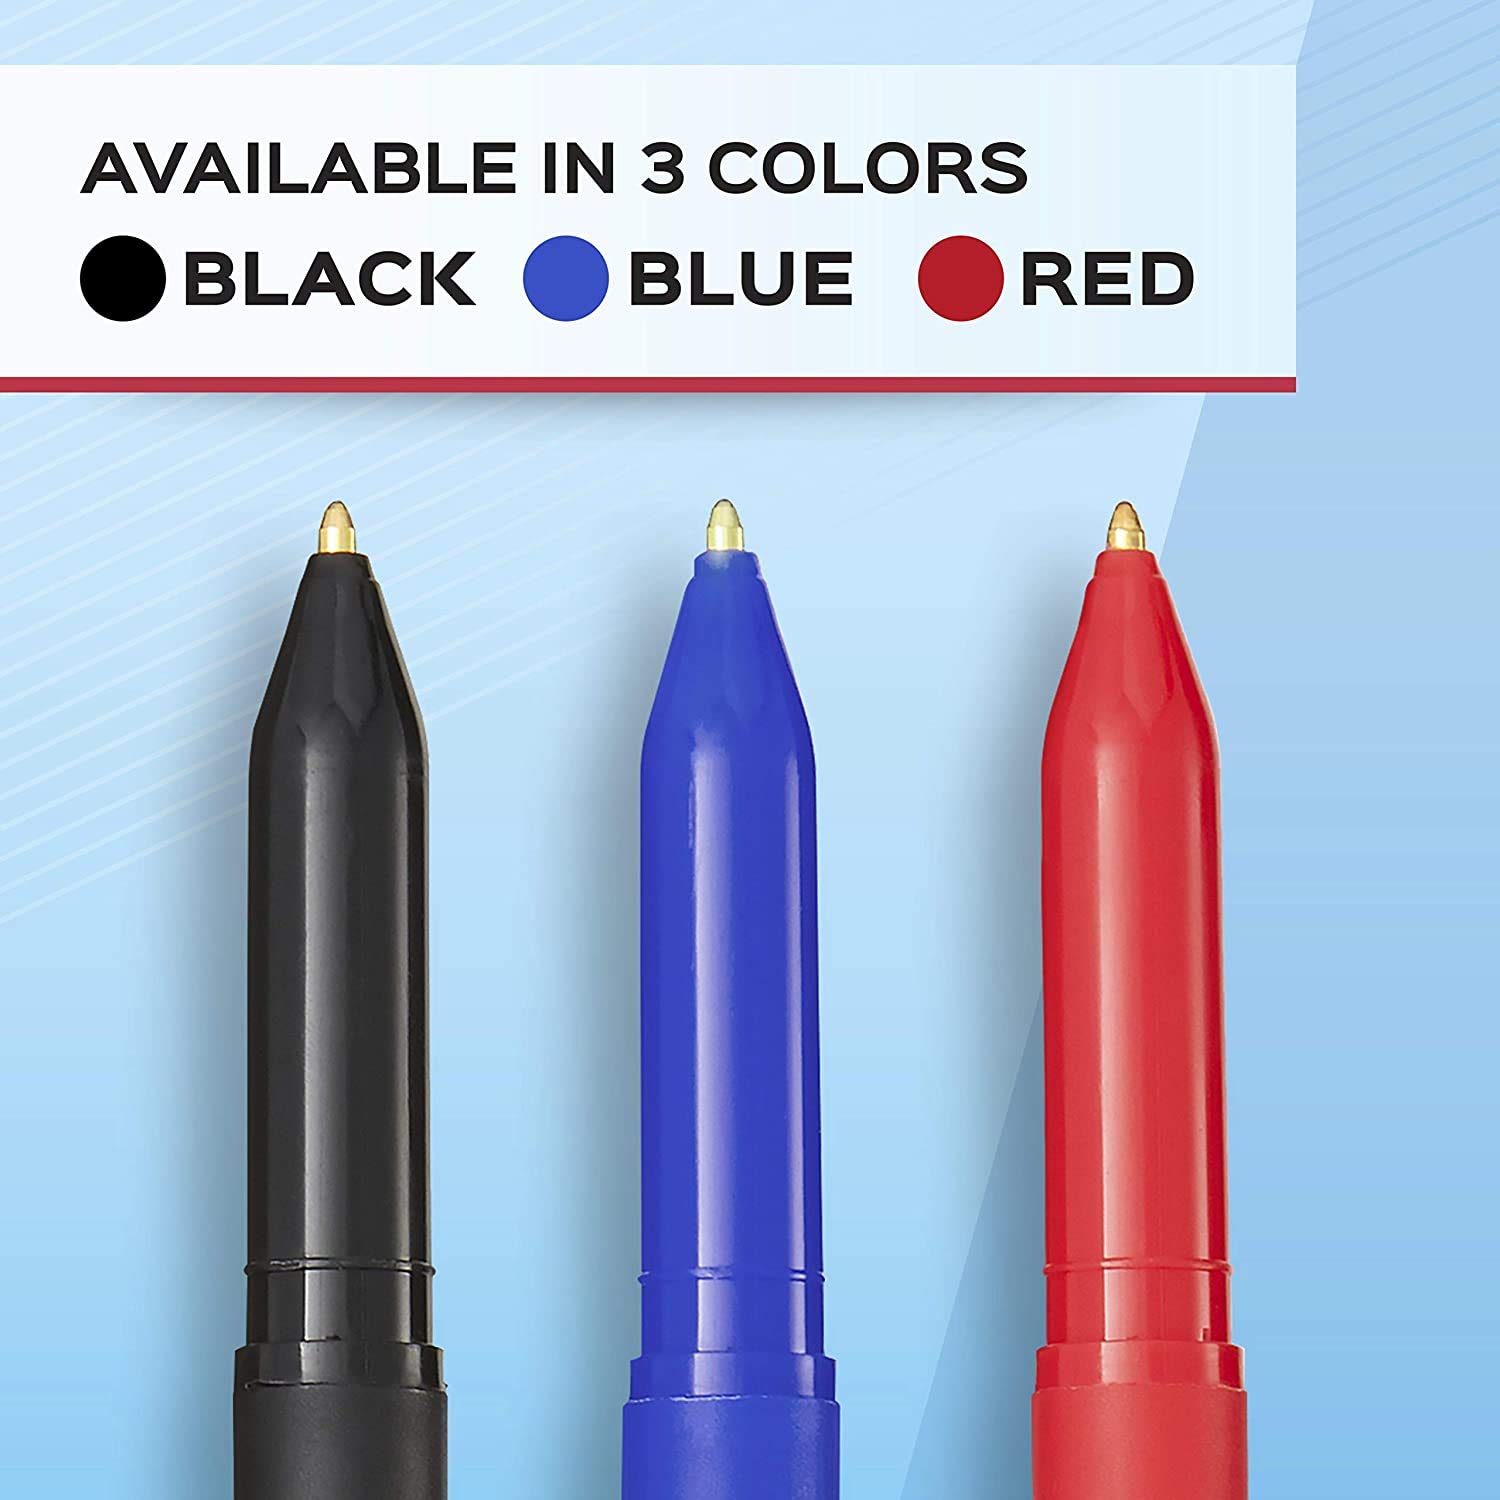 Paper Mate Ballpoint Pens, Write Bros. Black Ink Pens, Medium Point (1.0mm), 60 Count